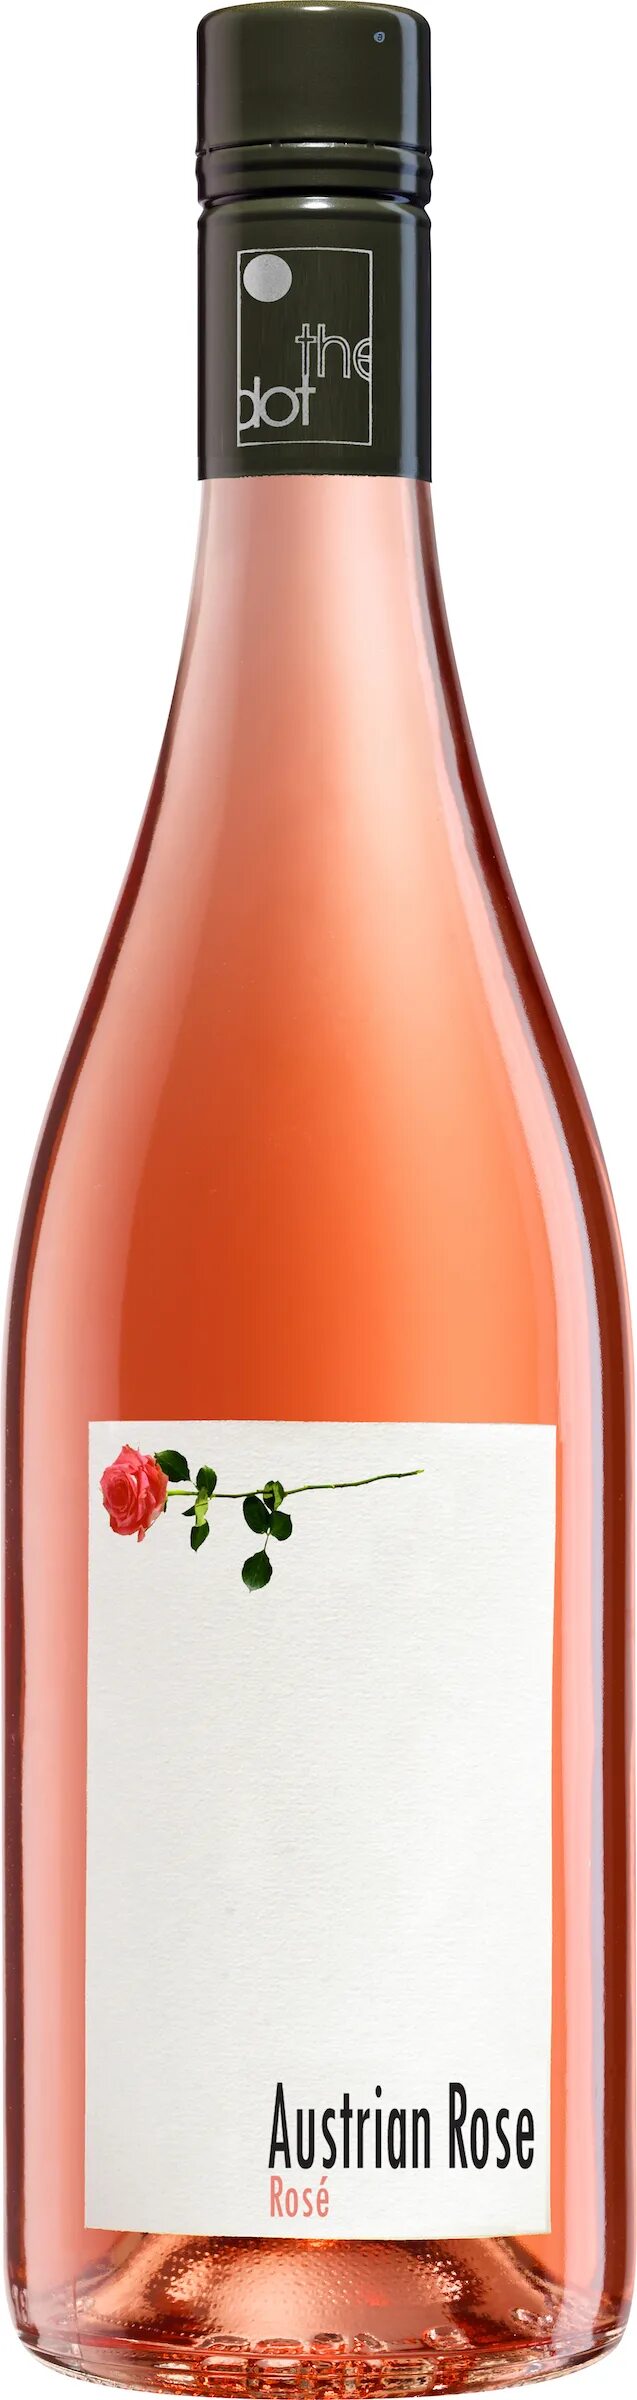 Вино Zweigelt Rose. Austrian Rose вино. Zweigelt Rose Австрия. Вино Цвайгельт Австрия. Цвайгельт тамань